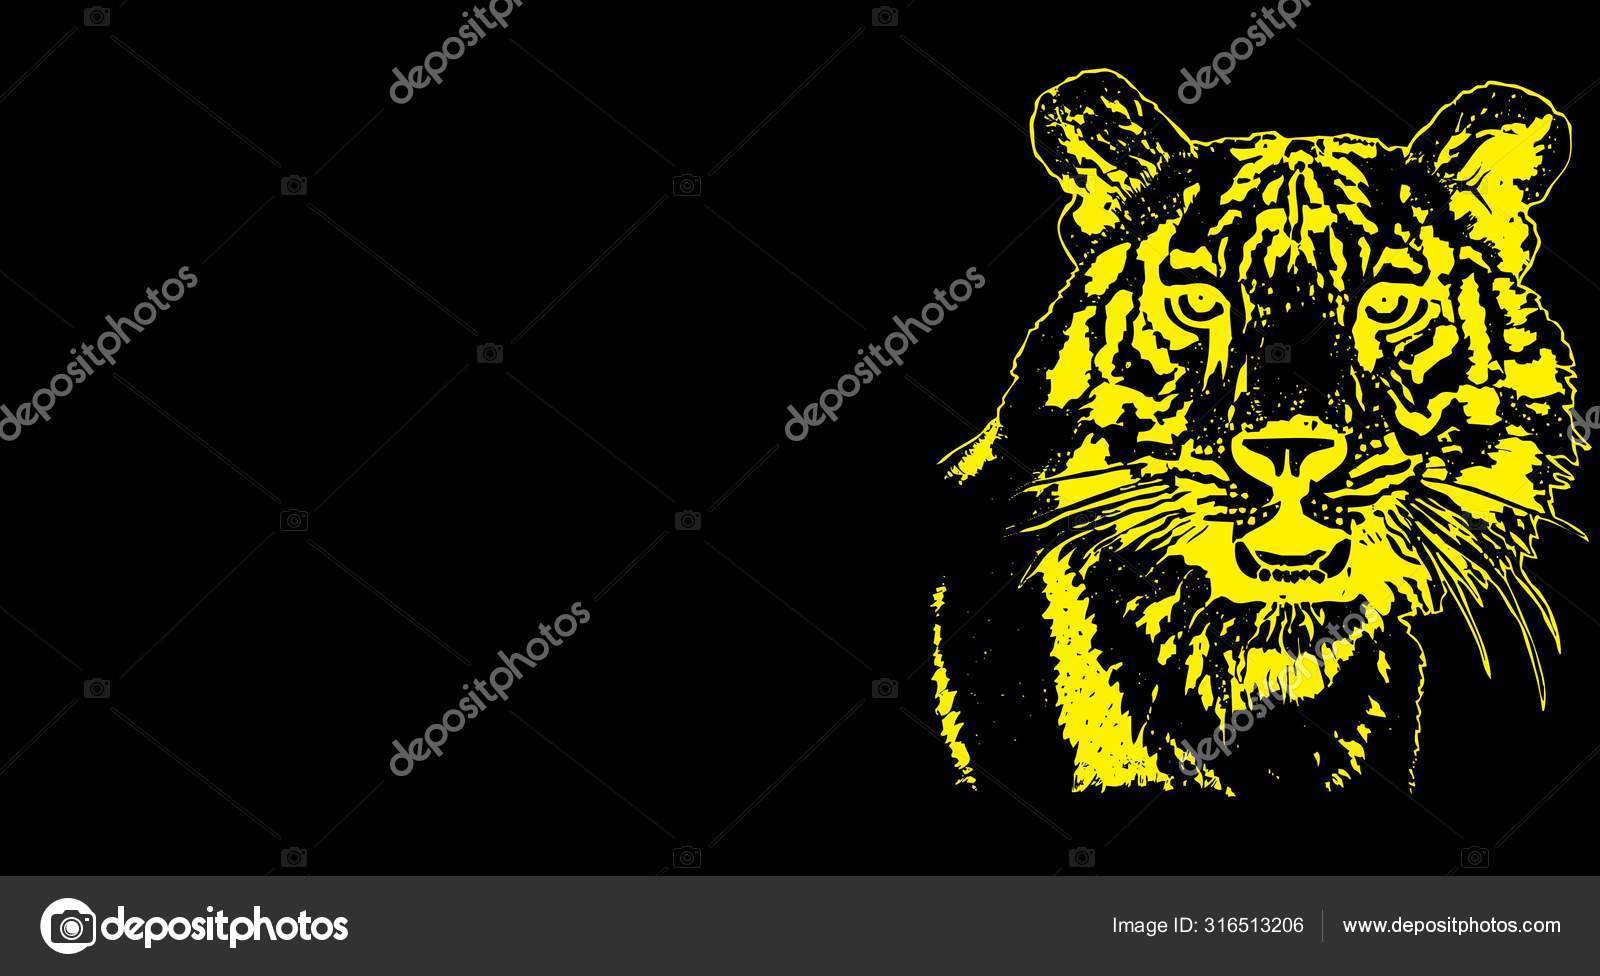 Tiger black background Stock Photos, Royalty Free Tiger black background  Images | Depositphotos